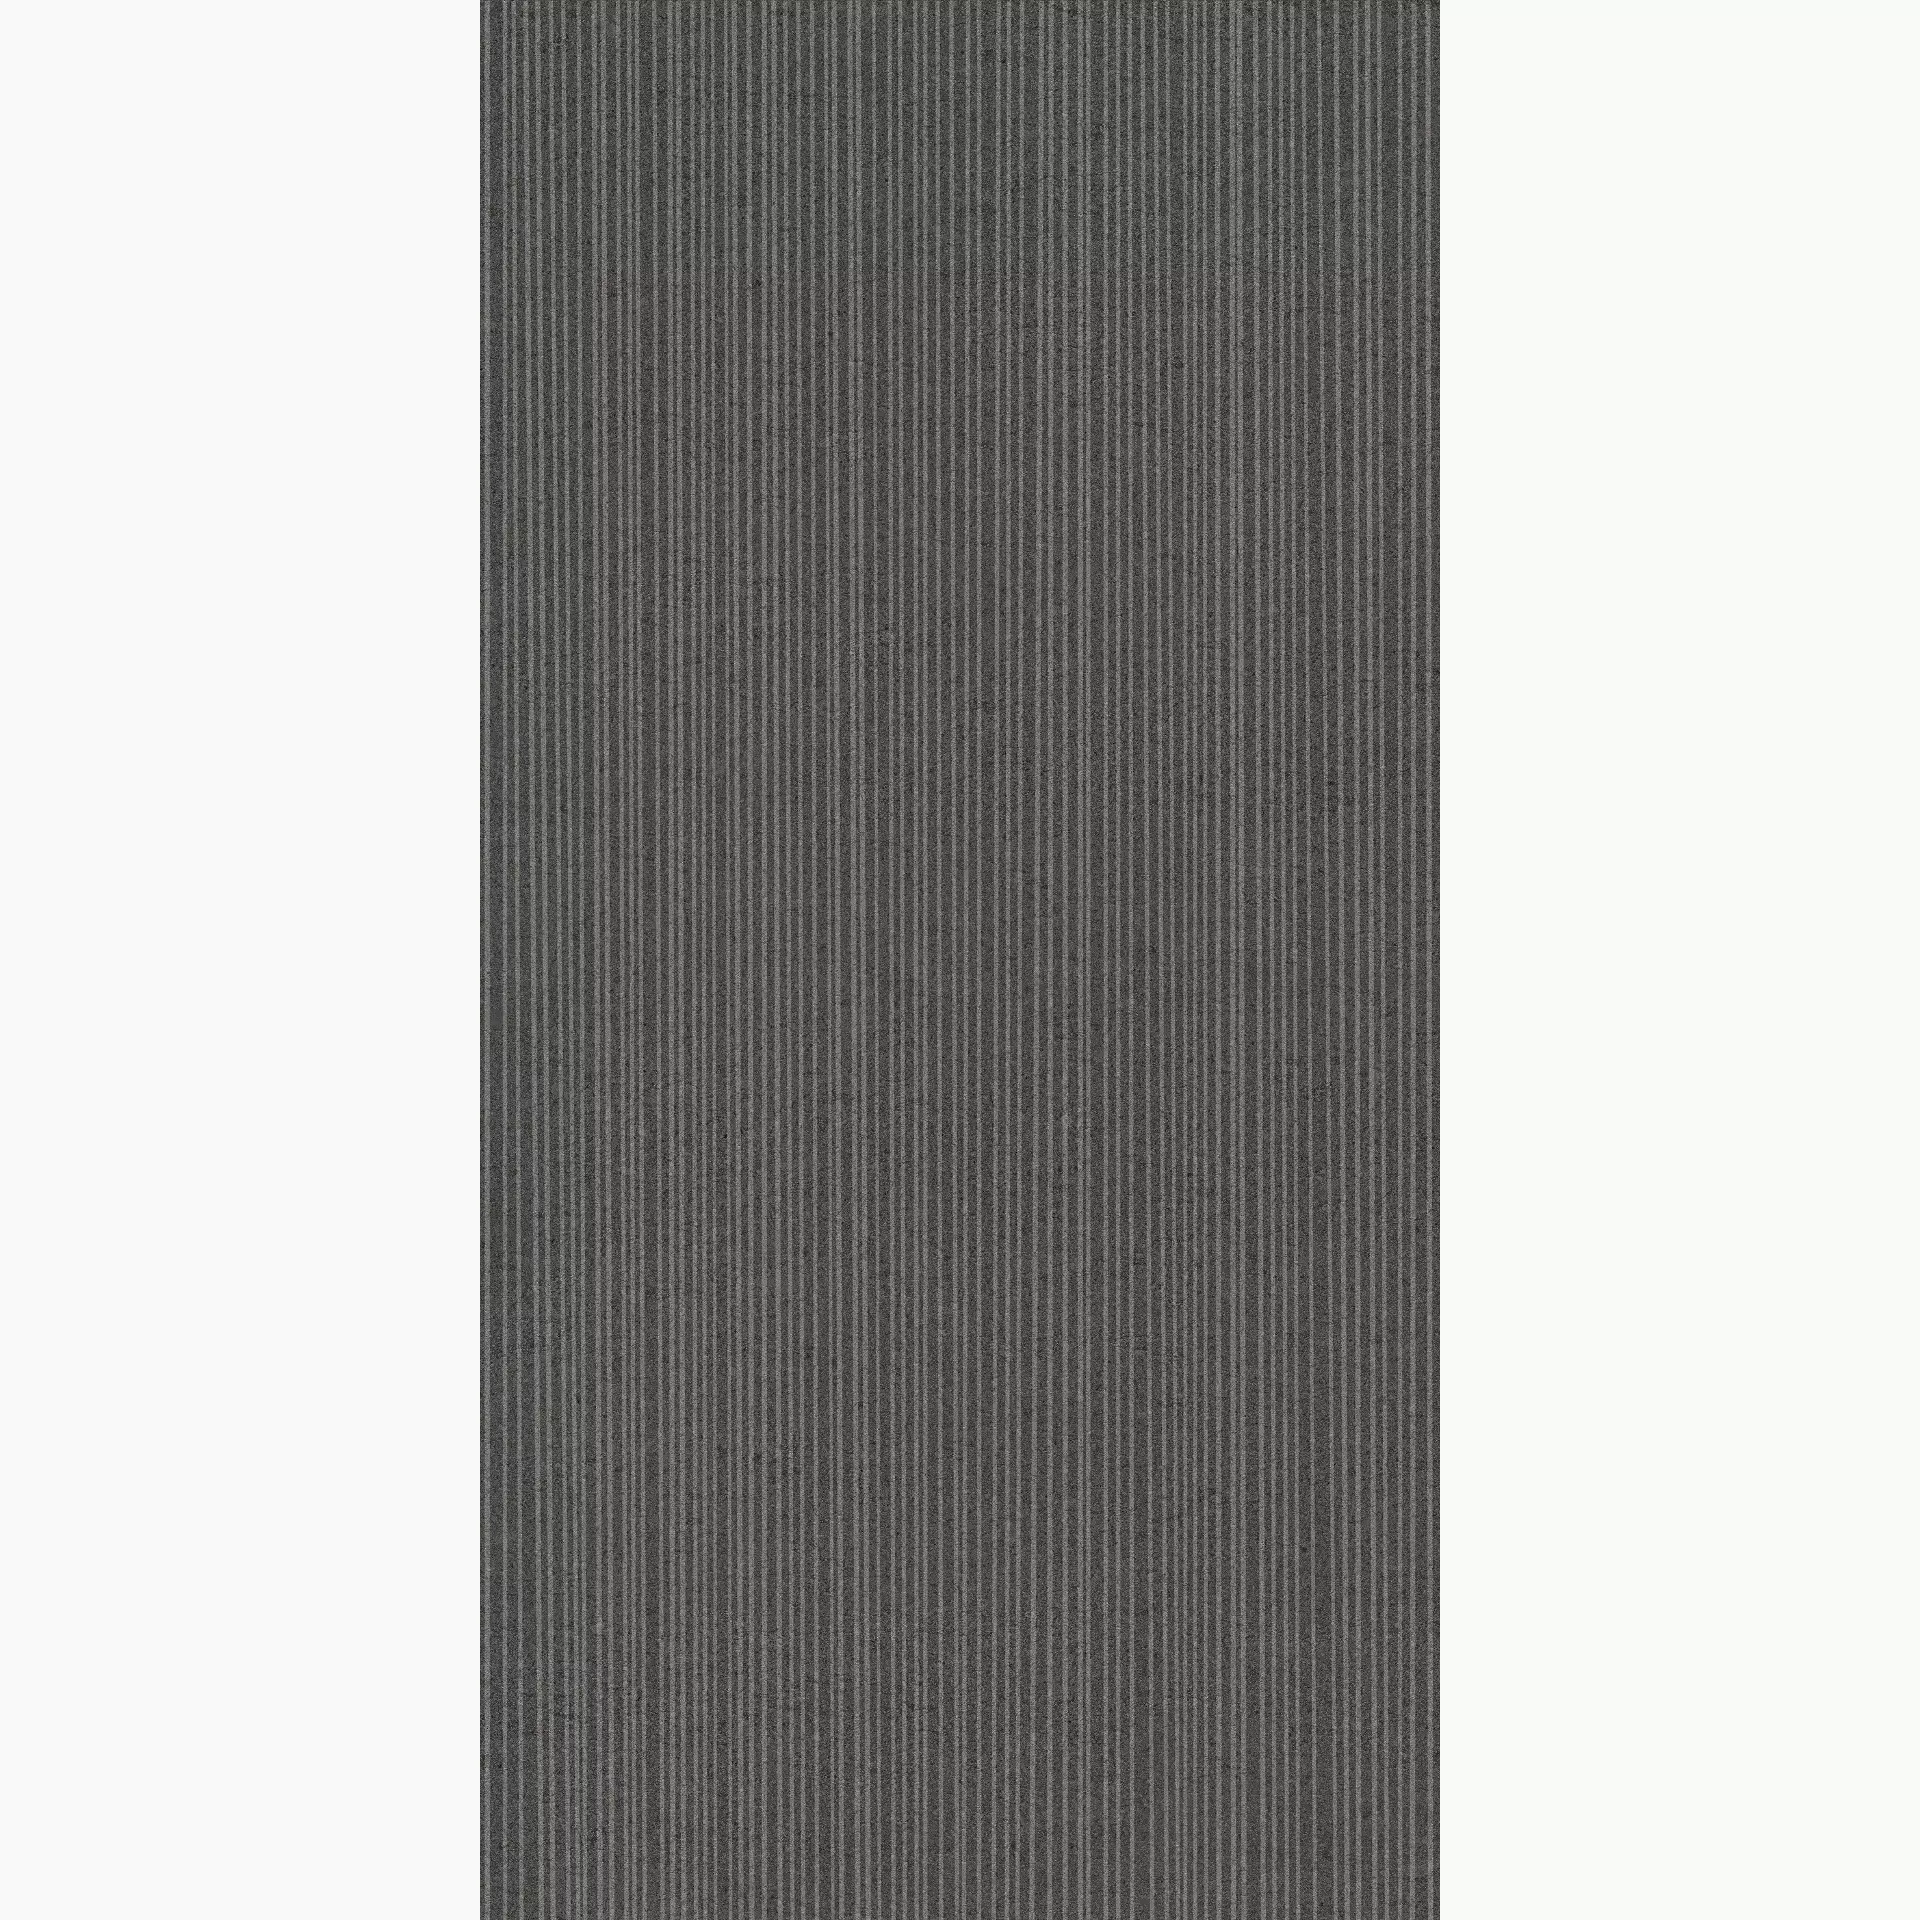 Coem Tweed Stone Black Naturale Black 0TW717R natur 75x149,7cm rektifiziert 10mm